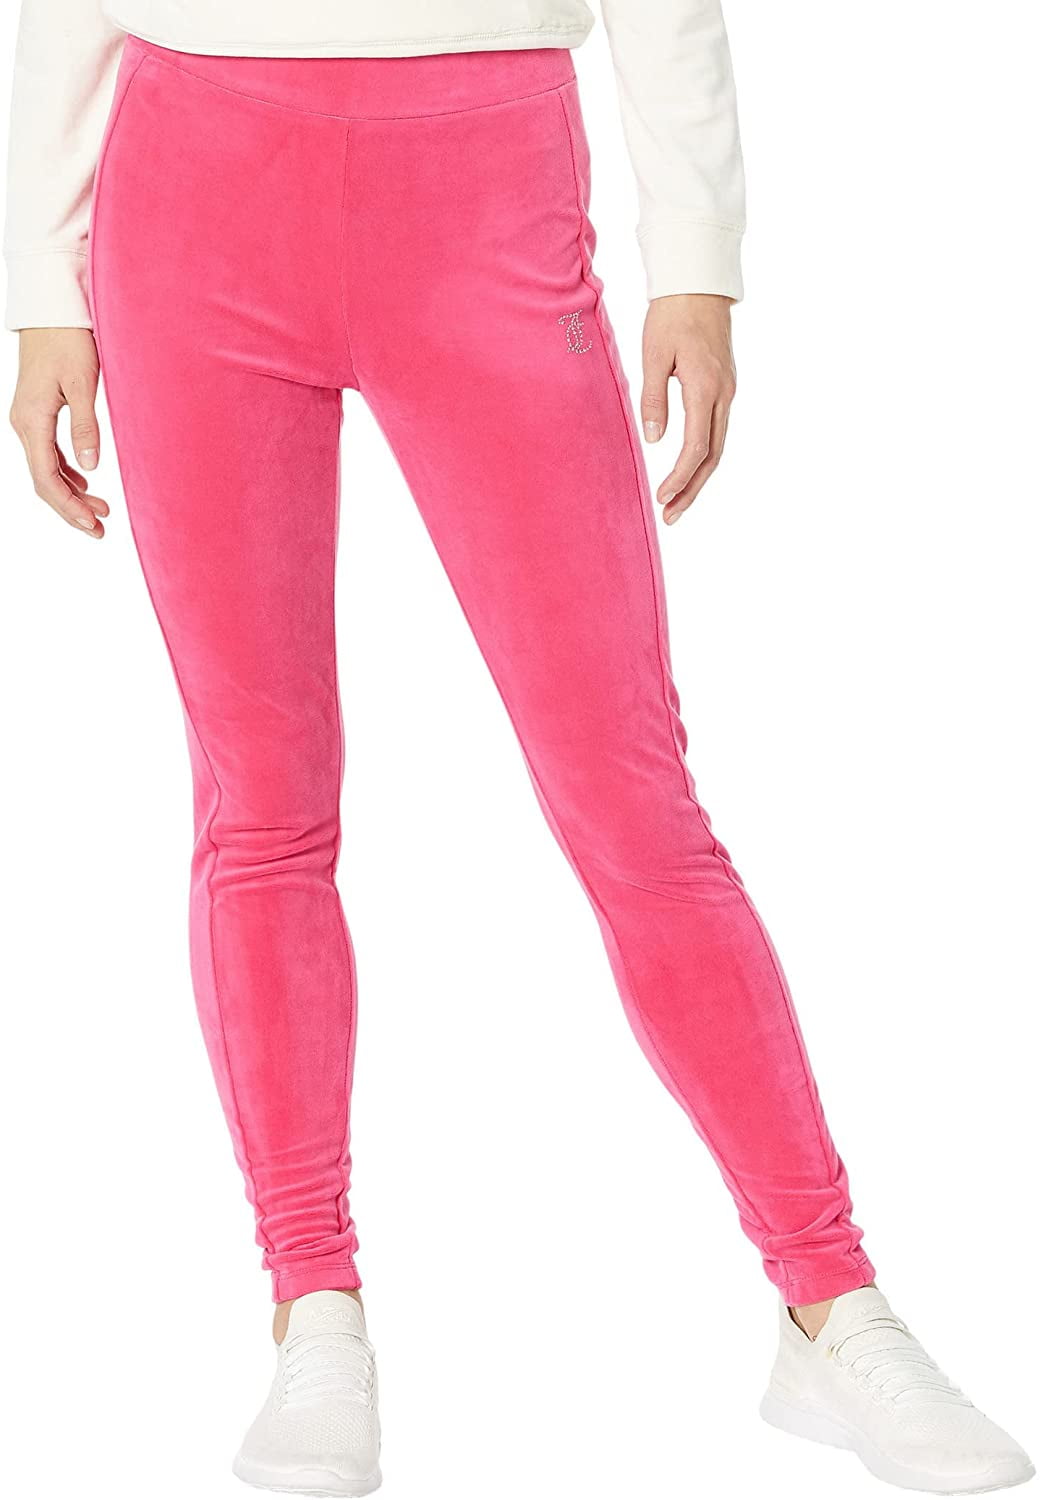 Juicy Couture Branded Back Leggings Medium Vixen Pink 